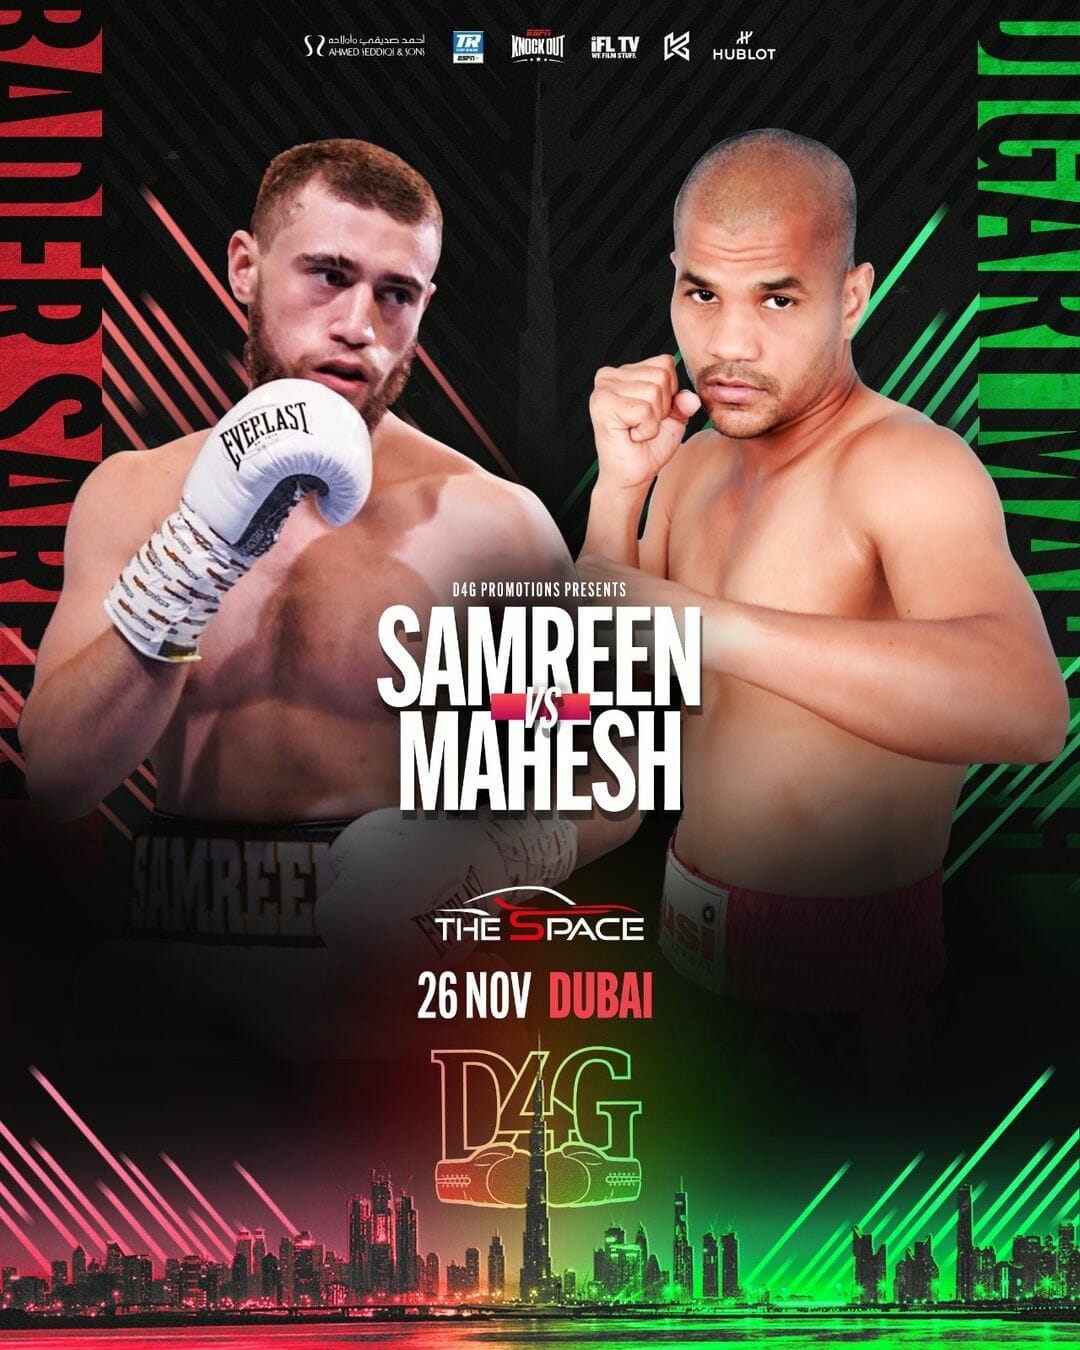 Samreen vs Marsh - Dubai boxing match in Round 10.